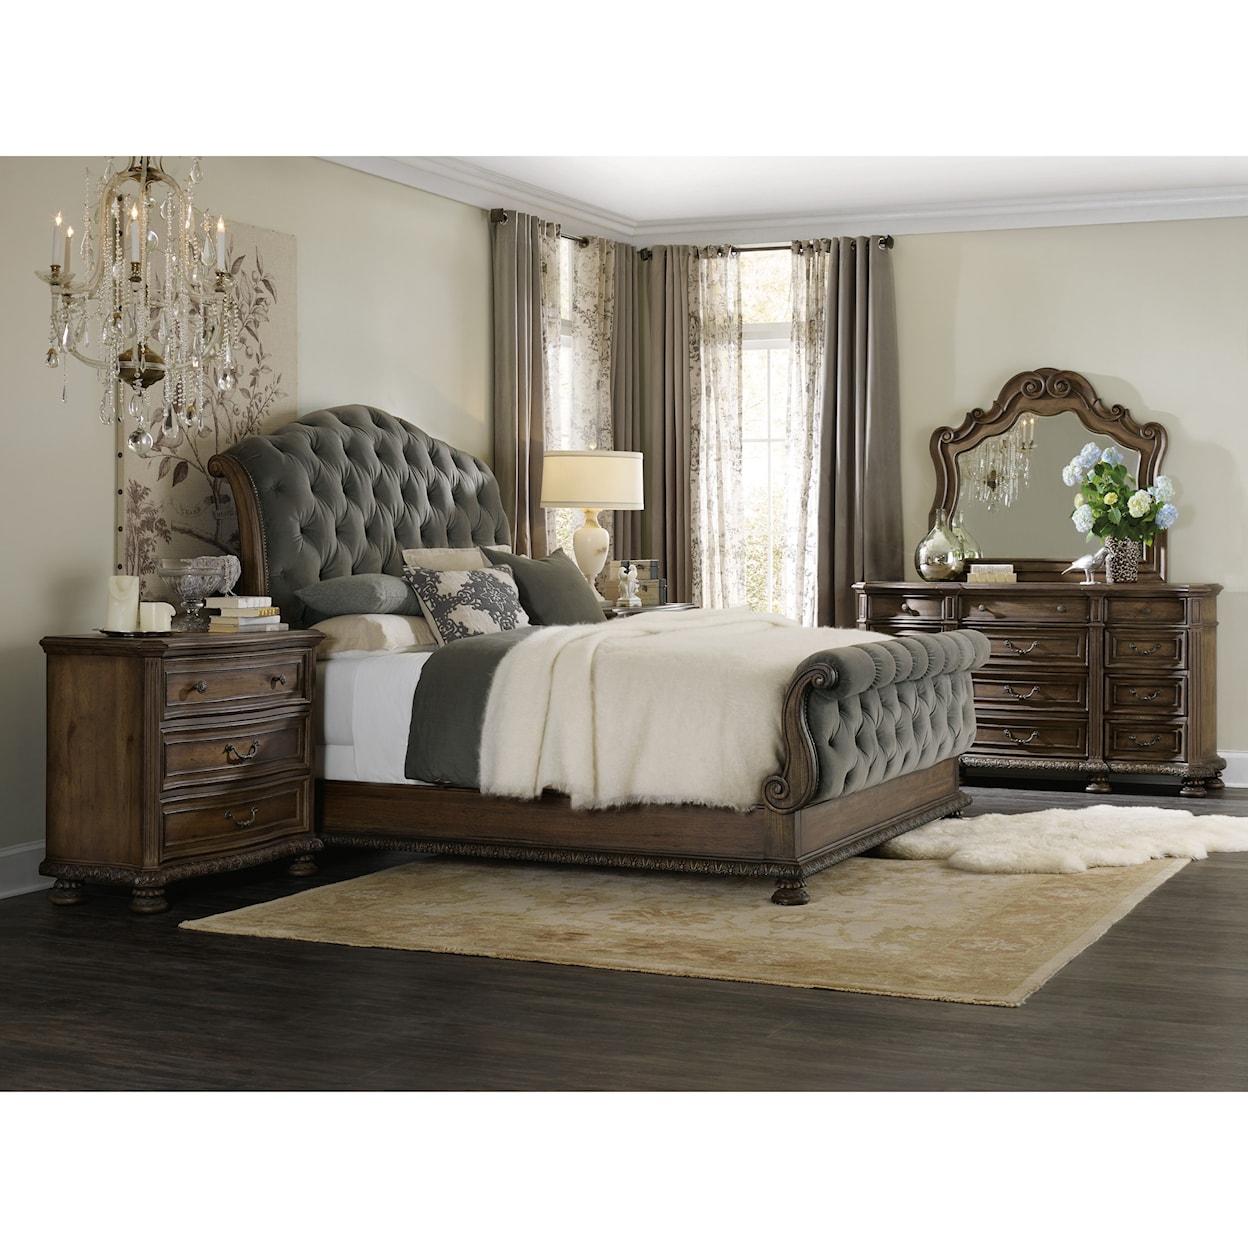 Hooker Furniture Rhapsody King Tufted Bed